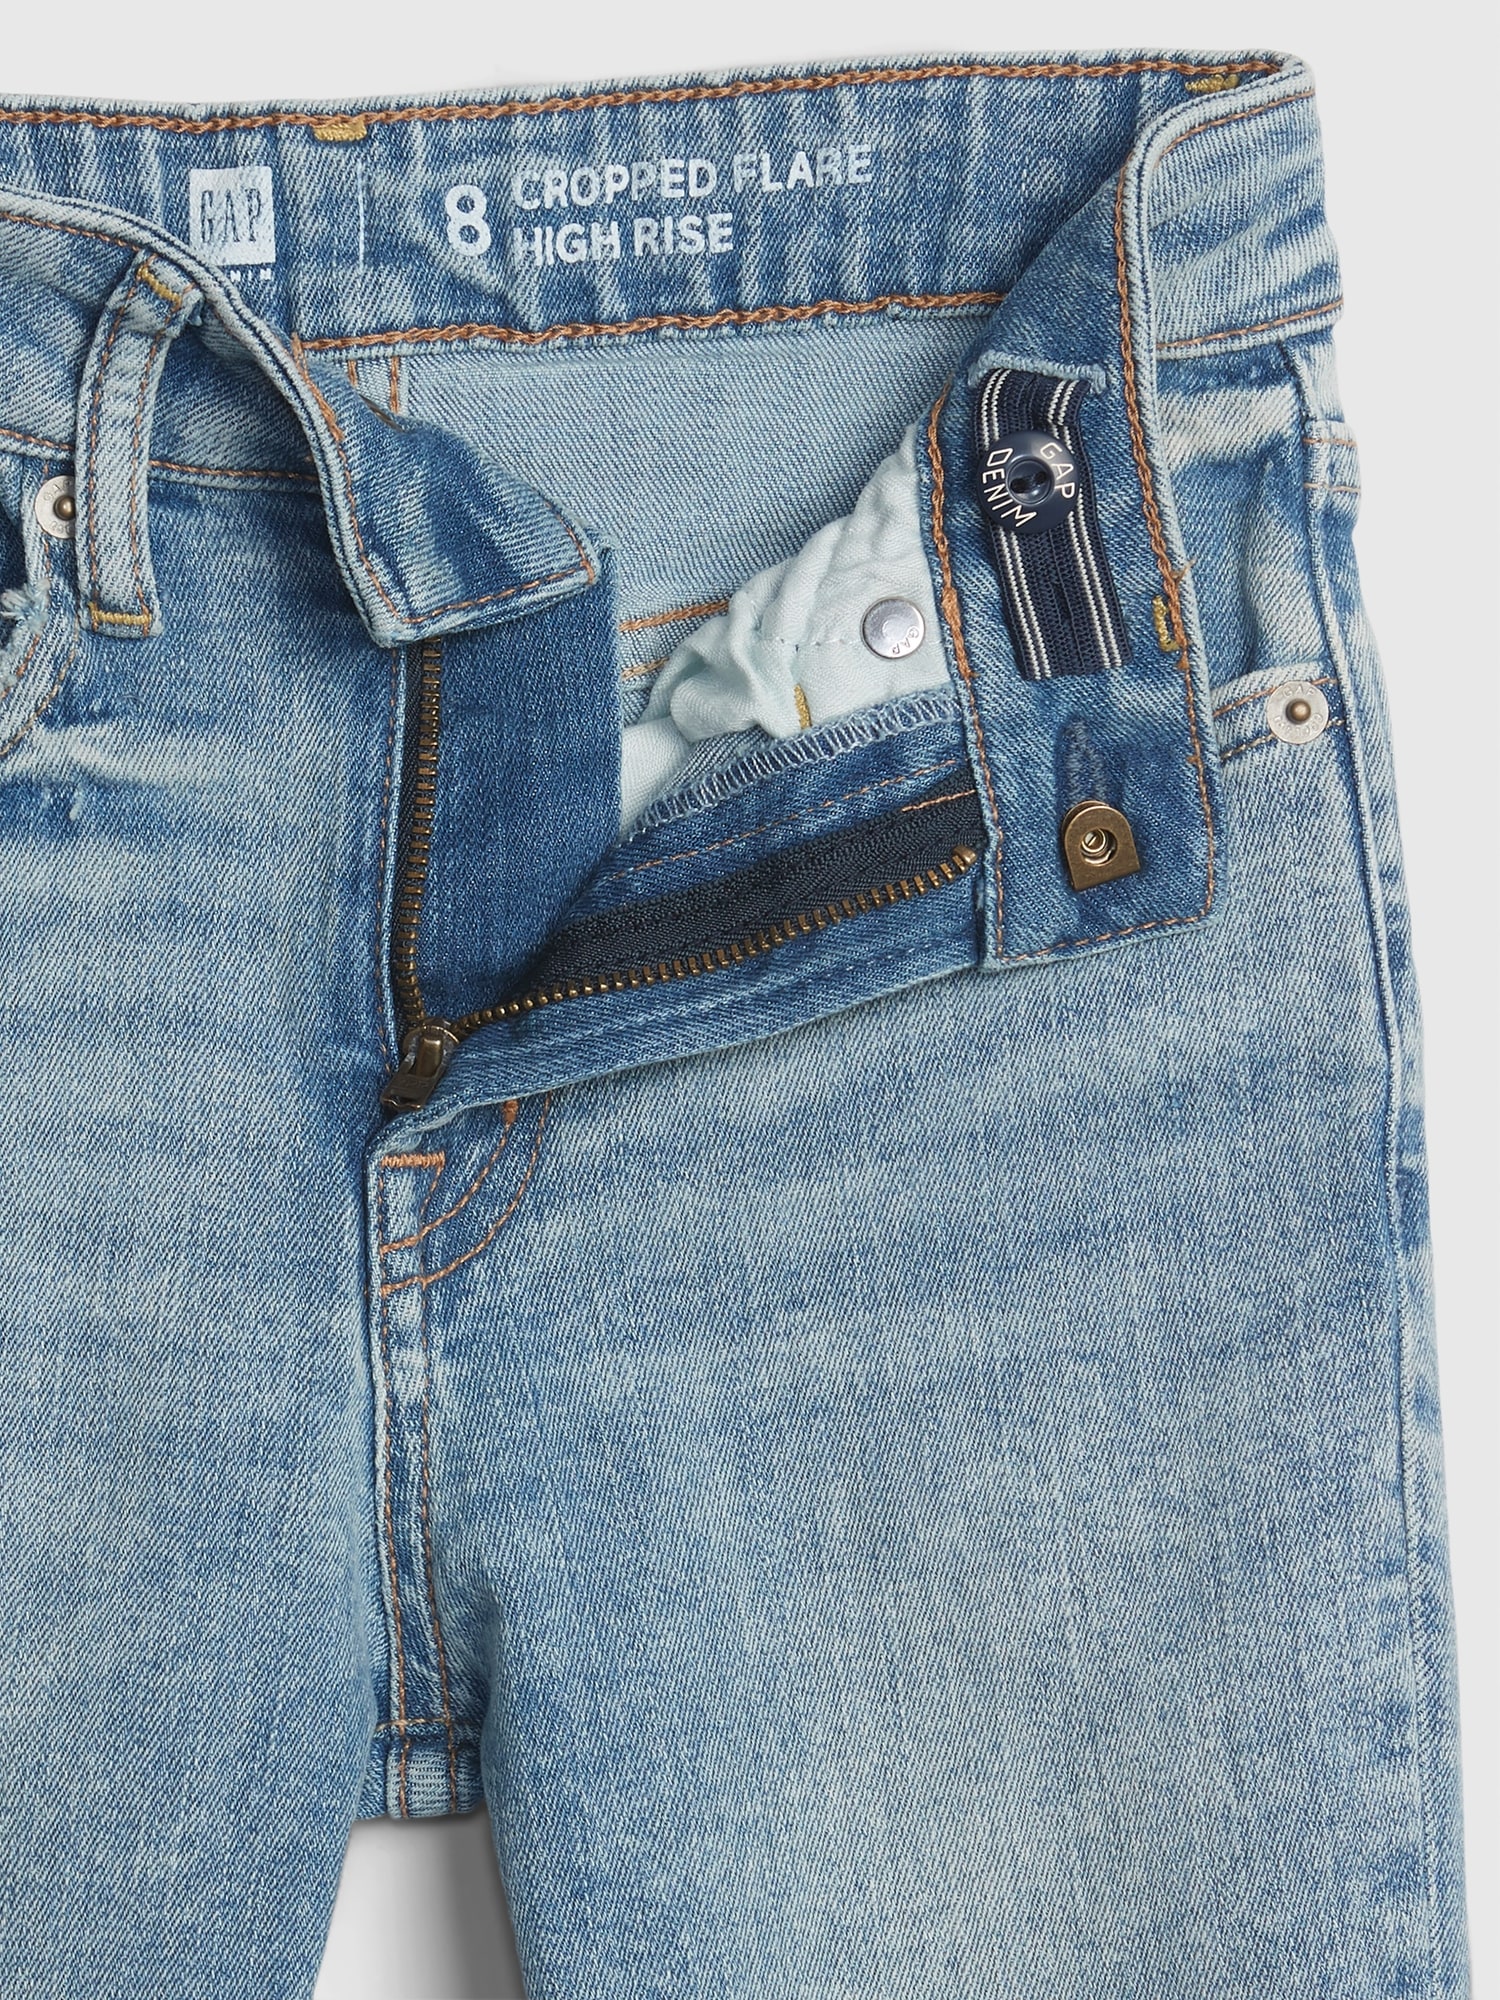 gap cropped jeans